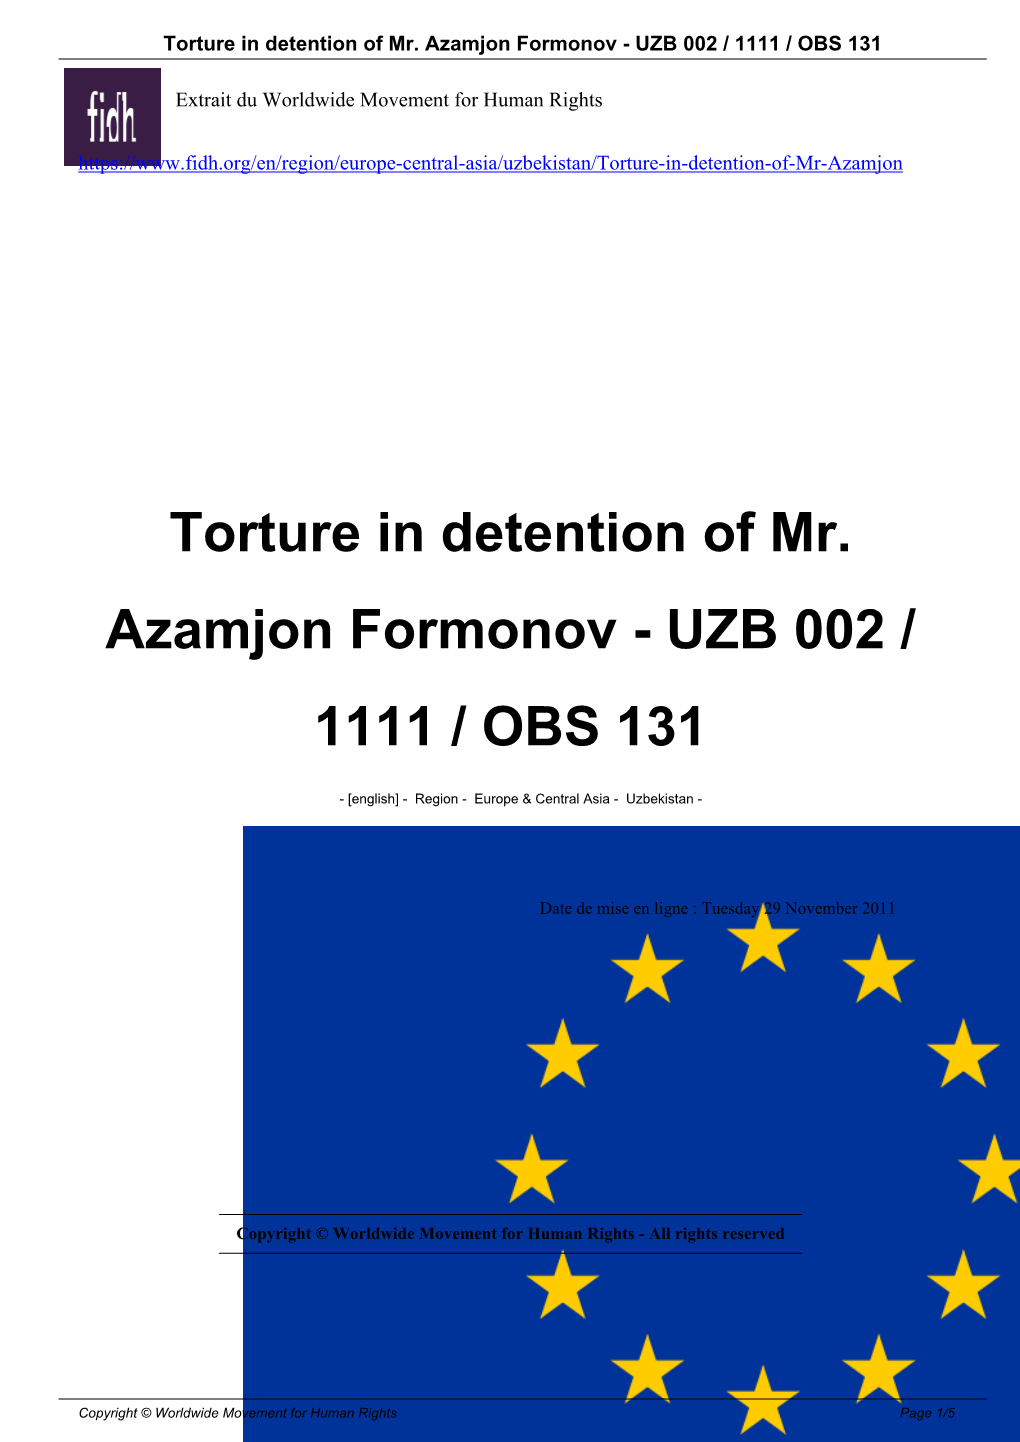 Torture in Detention of Mr. Azamjon Formonov - UZB 002 / 1111 / OBS 131